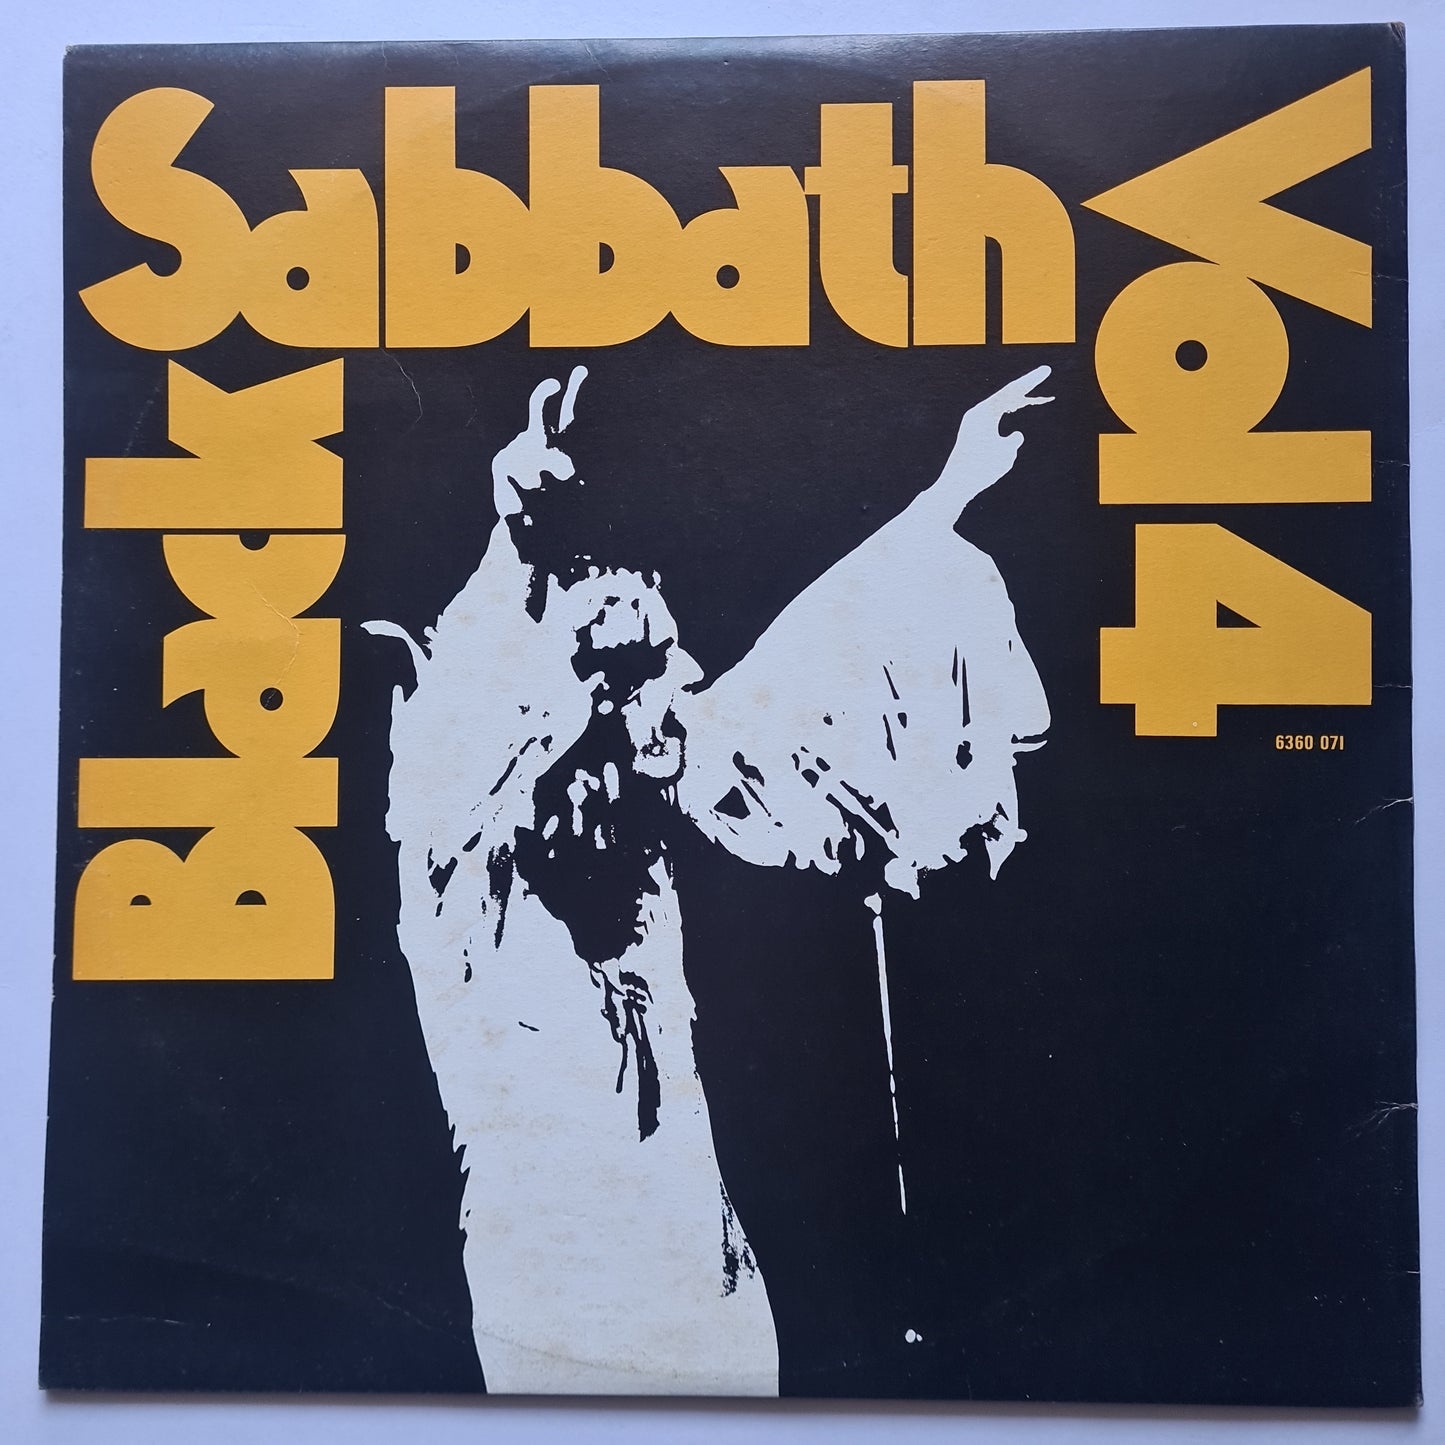 Black Sabbath – Black Sabbath Vol 4 - 1972 (Gatefold) - Vinyl Record